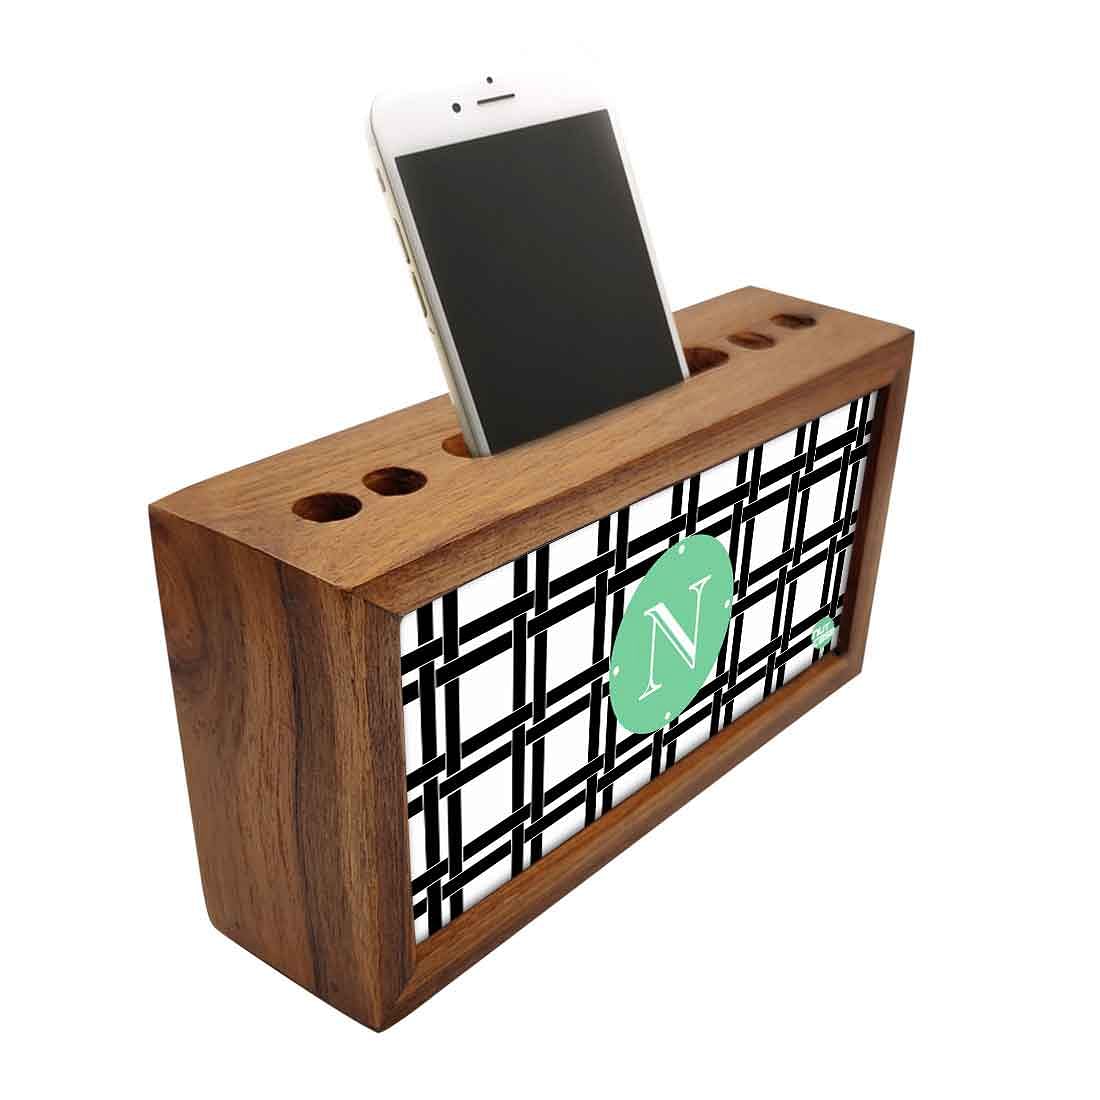 Personalized Wood desk accessories - Checkbox Black Nutcase